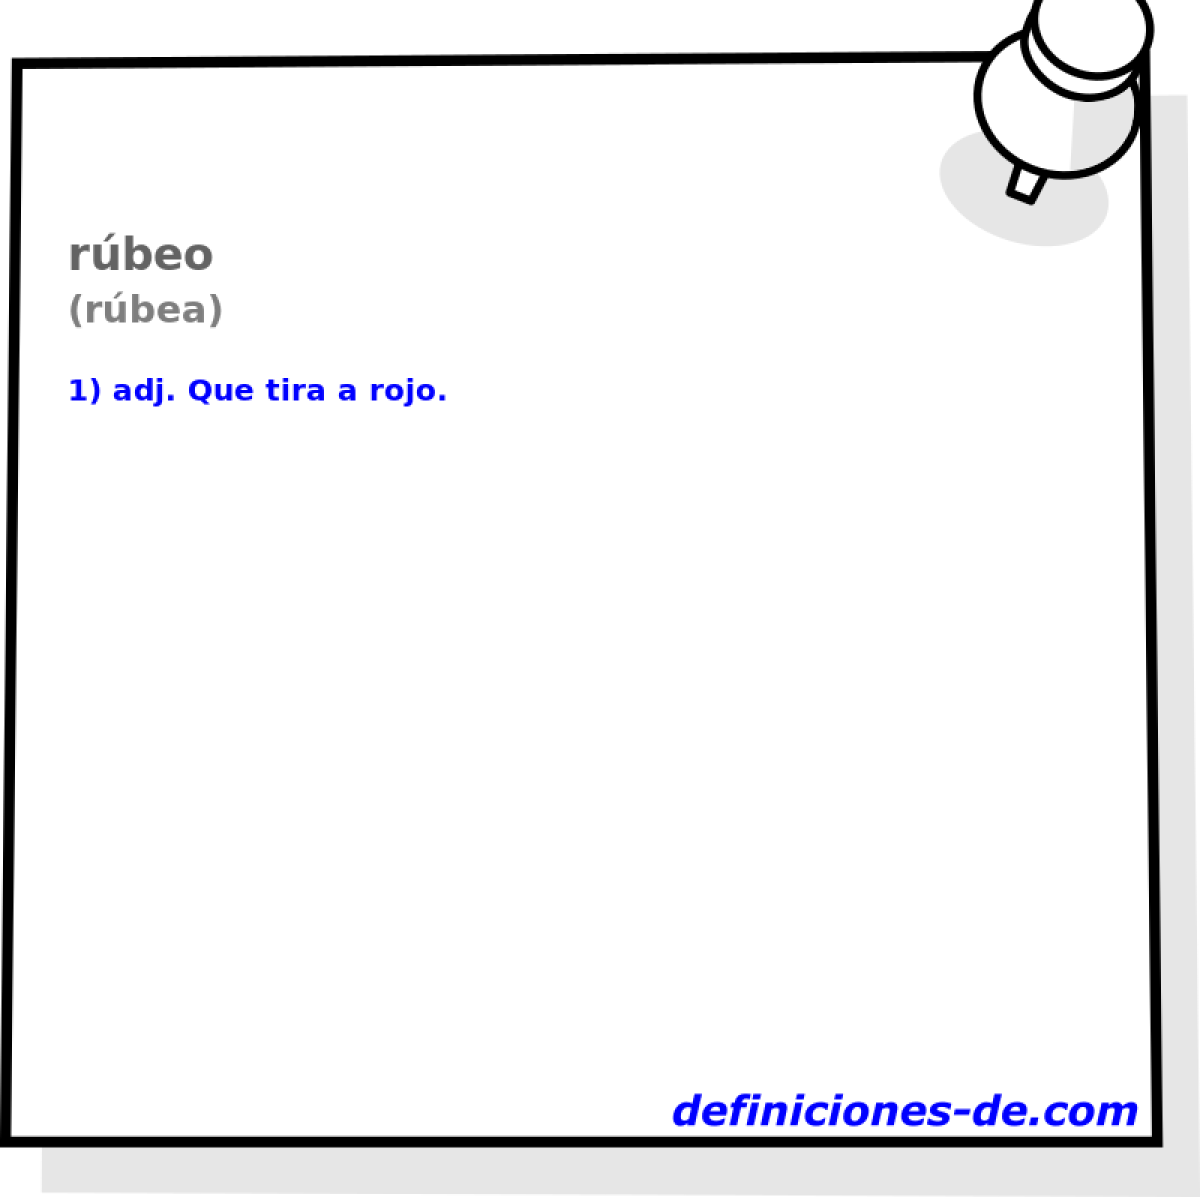 rbeo (rbea)